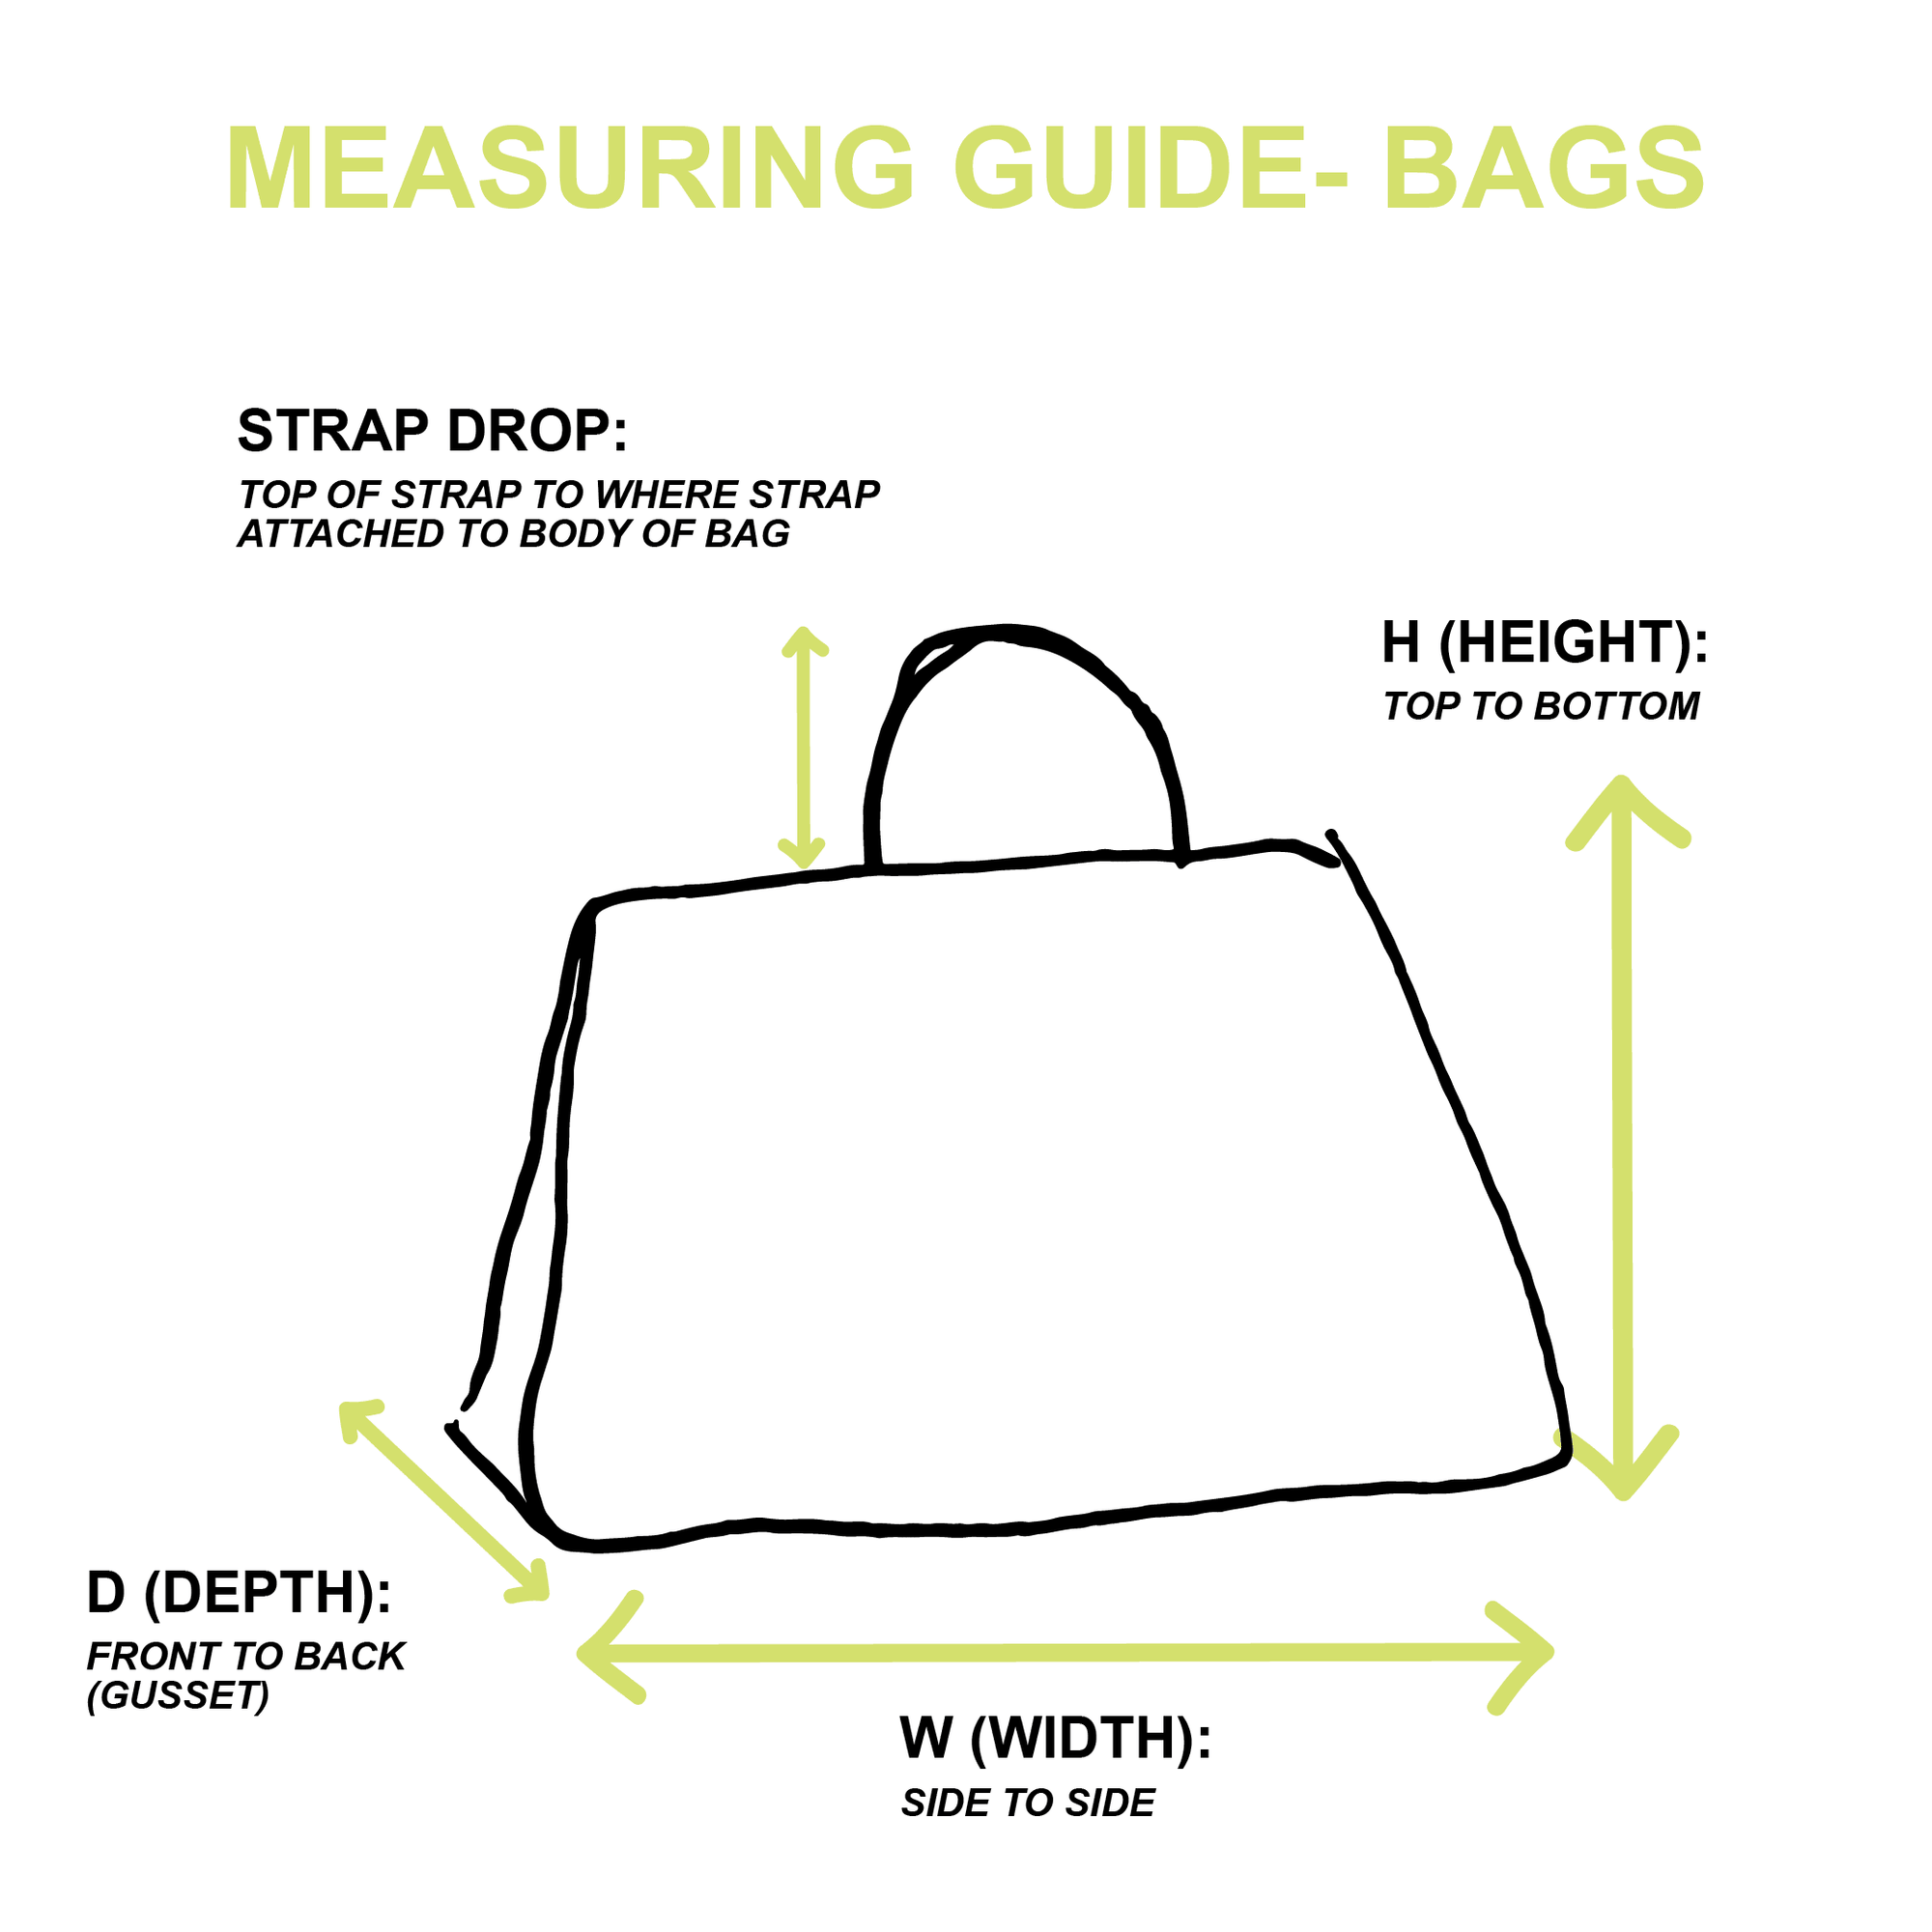 Chanel Gold Micro Chain Bag - Handbags